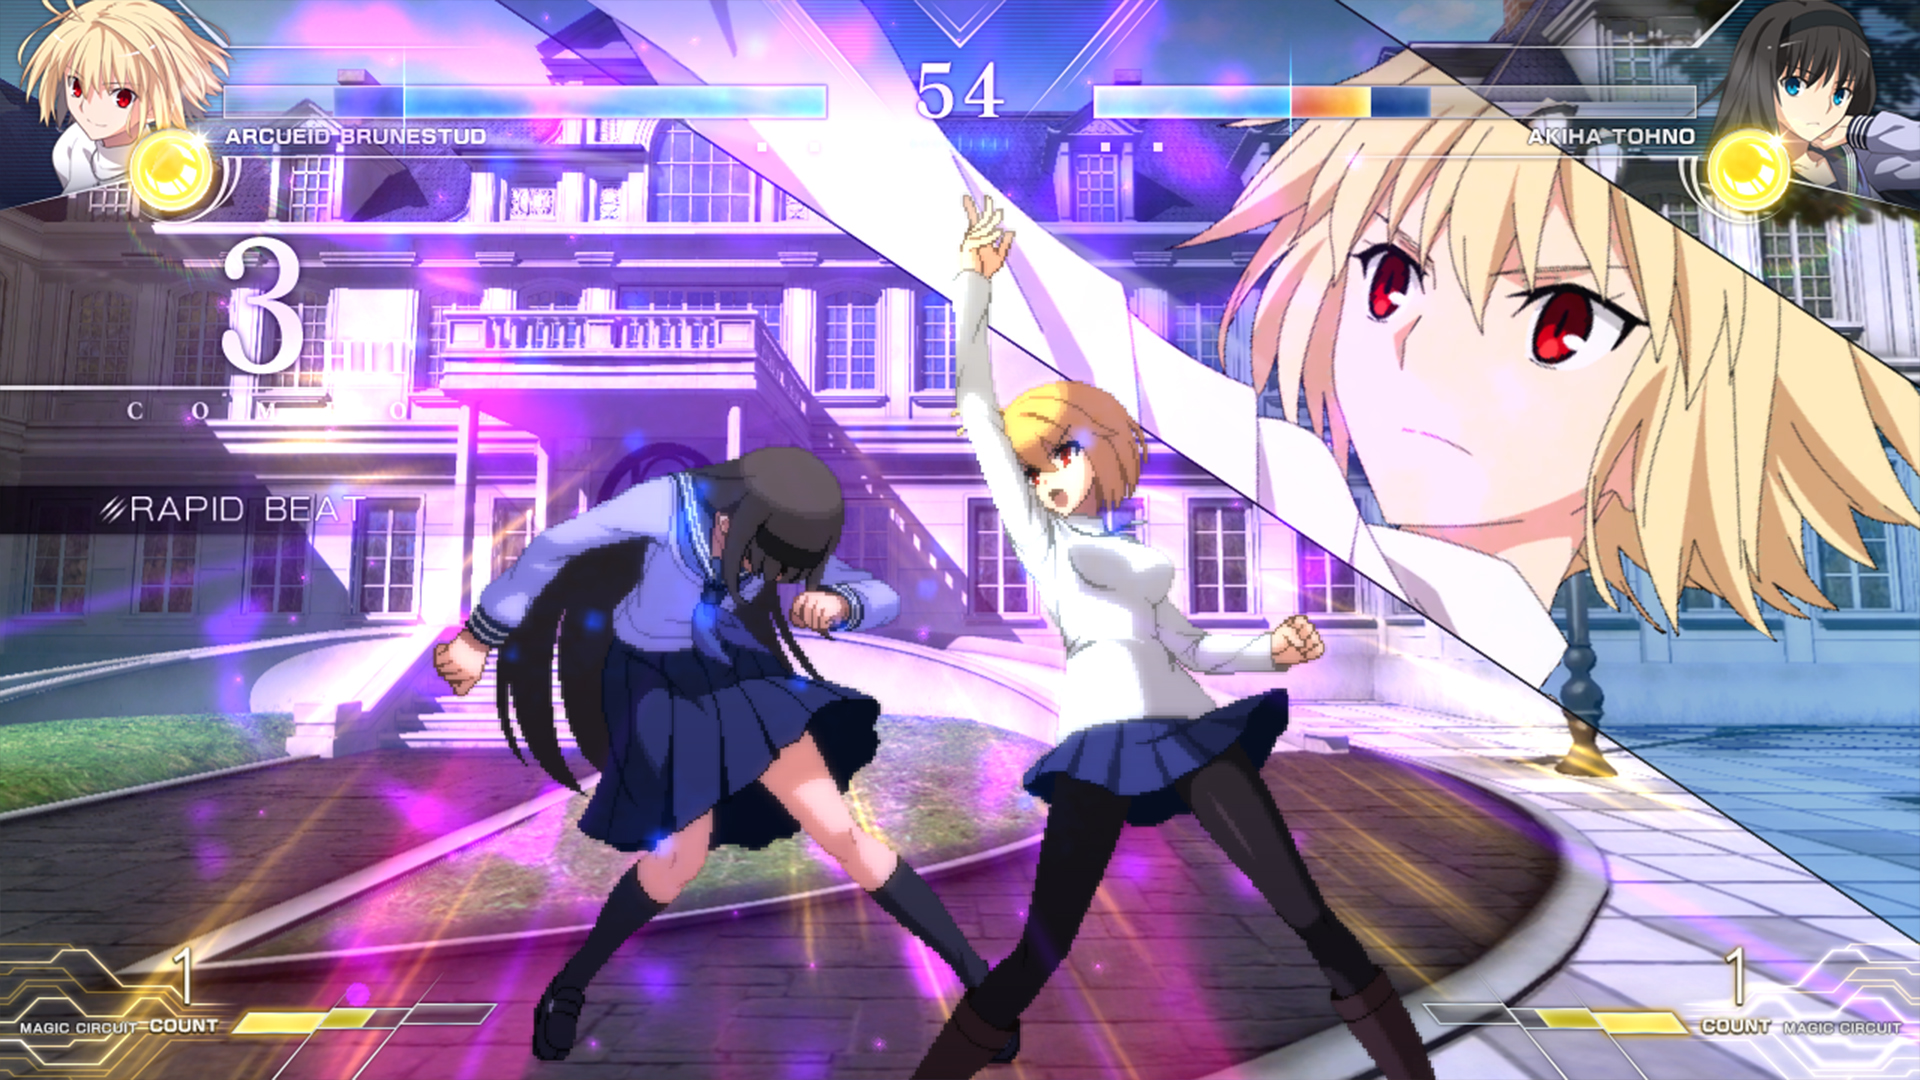 This anime fighting game actually rewards button mashing | ONE Esports